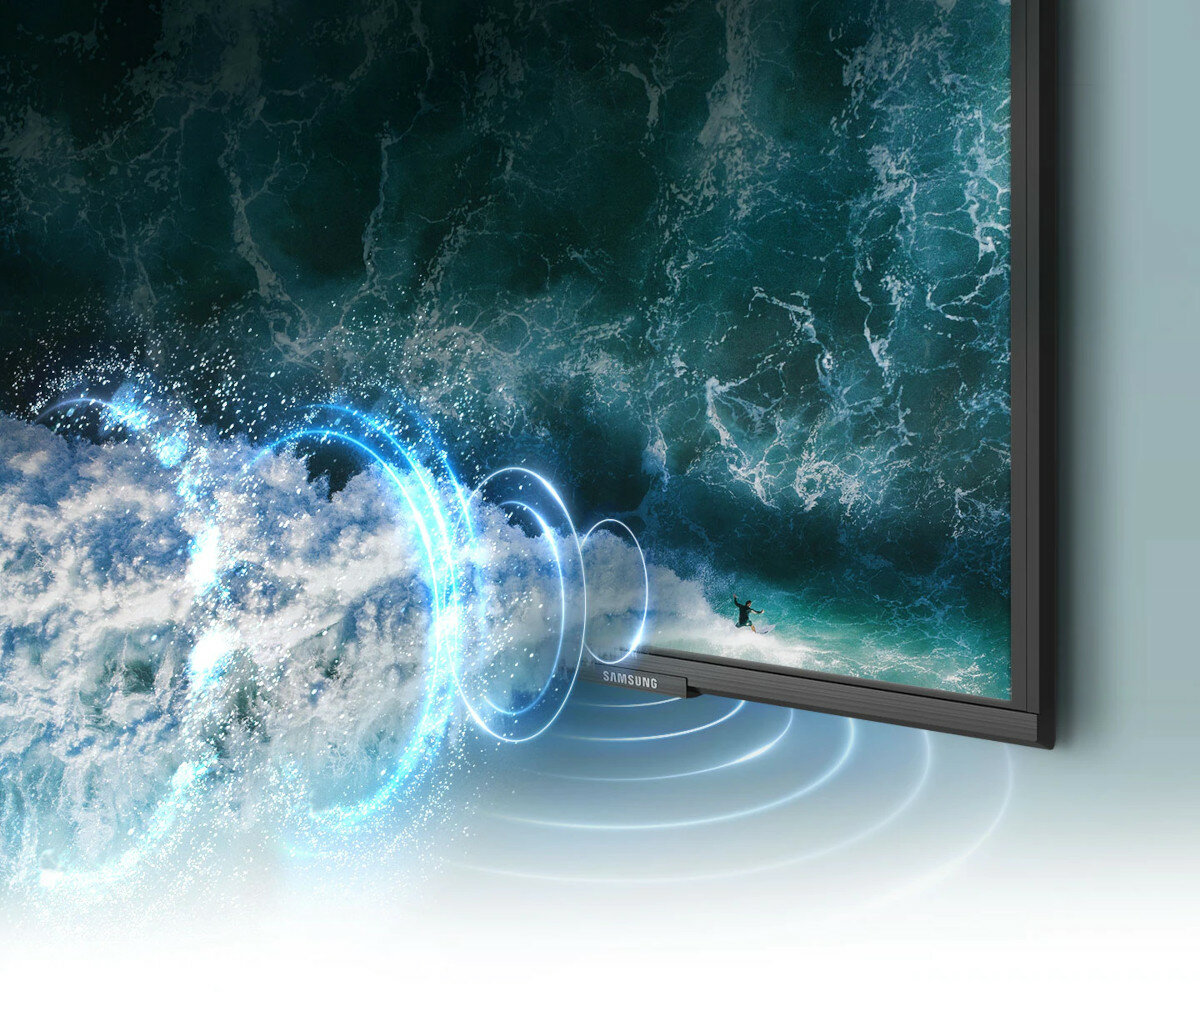 Telewizor Samsung QE50Q67A 50 cali pokazane fale dźwiękowe